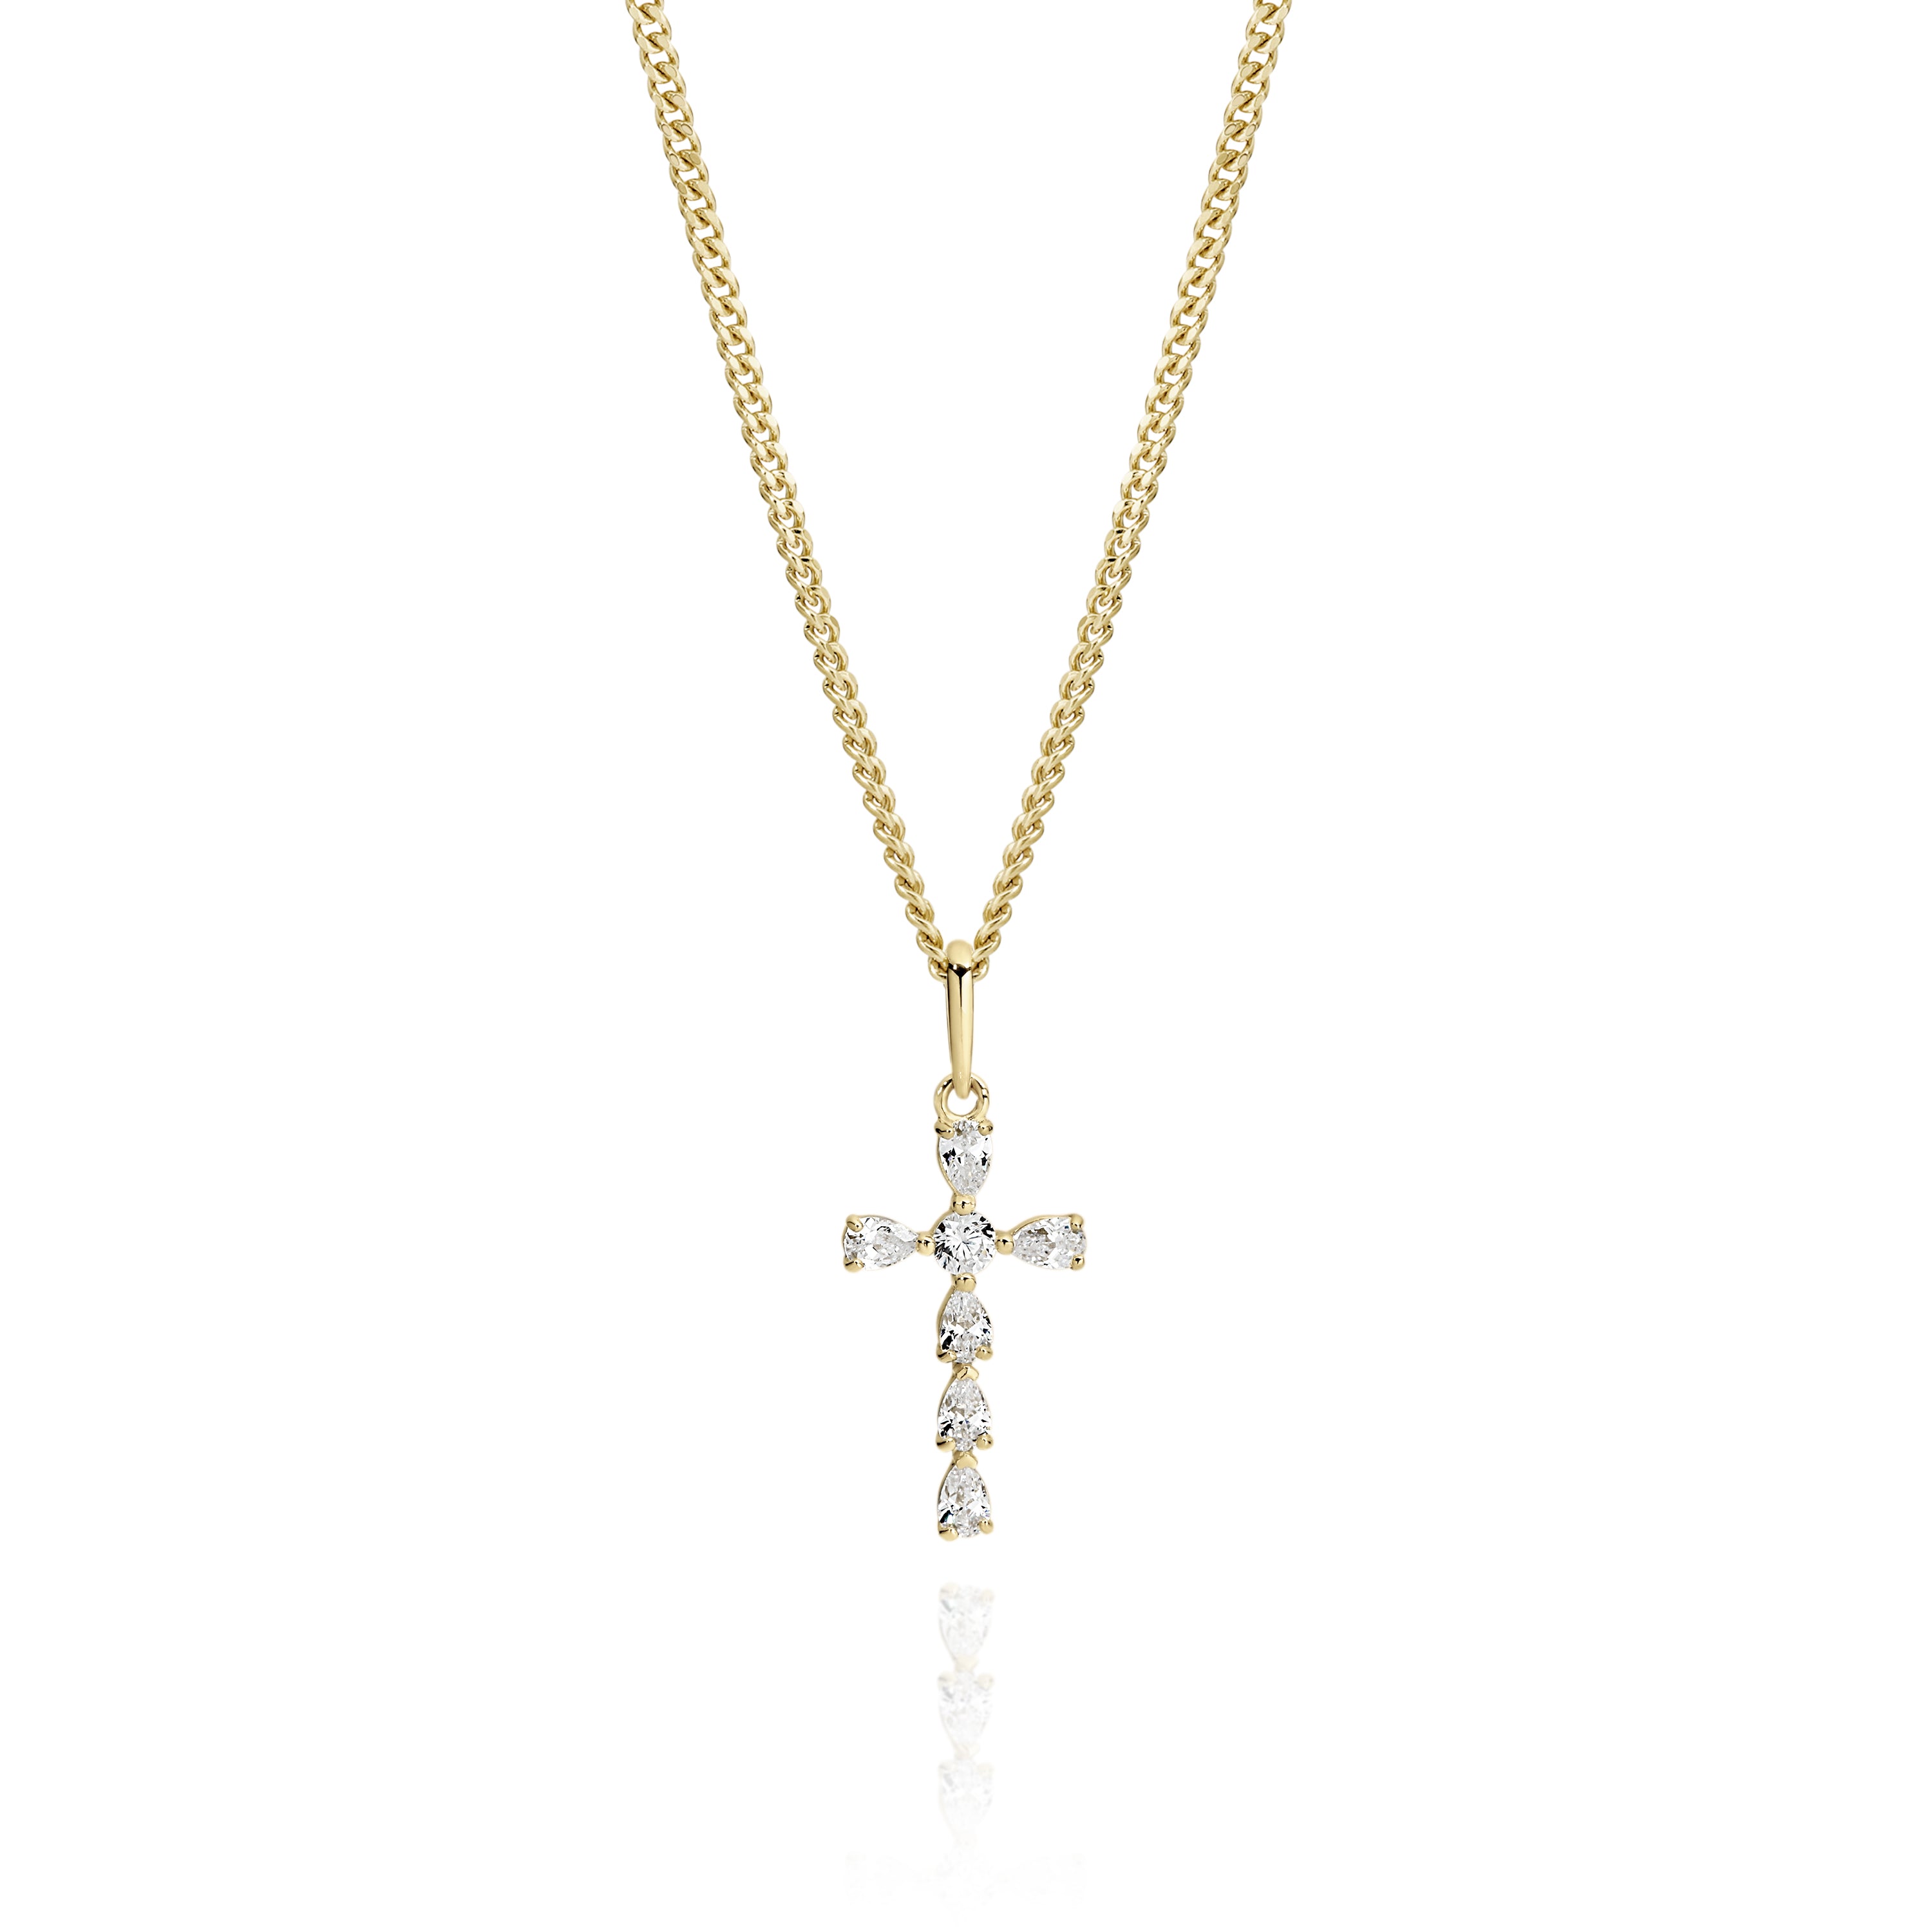 9ct gold stone set cross pendant